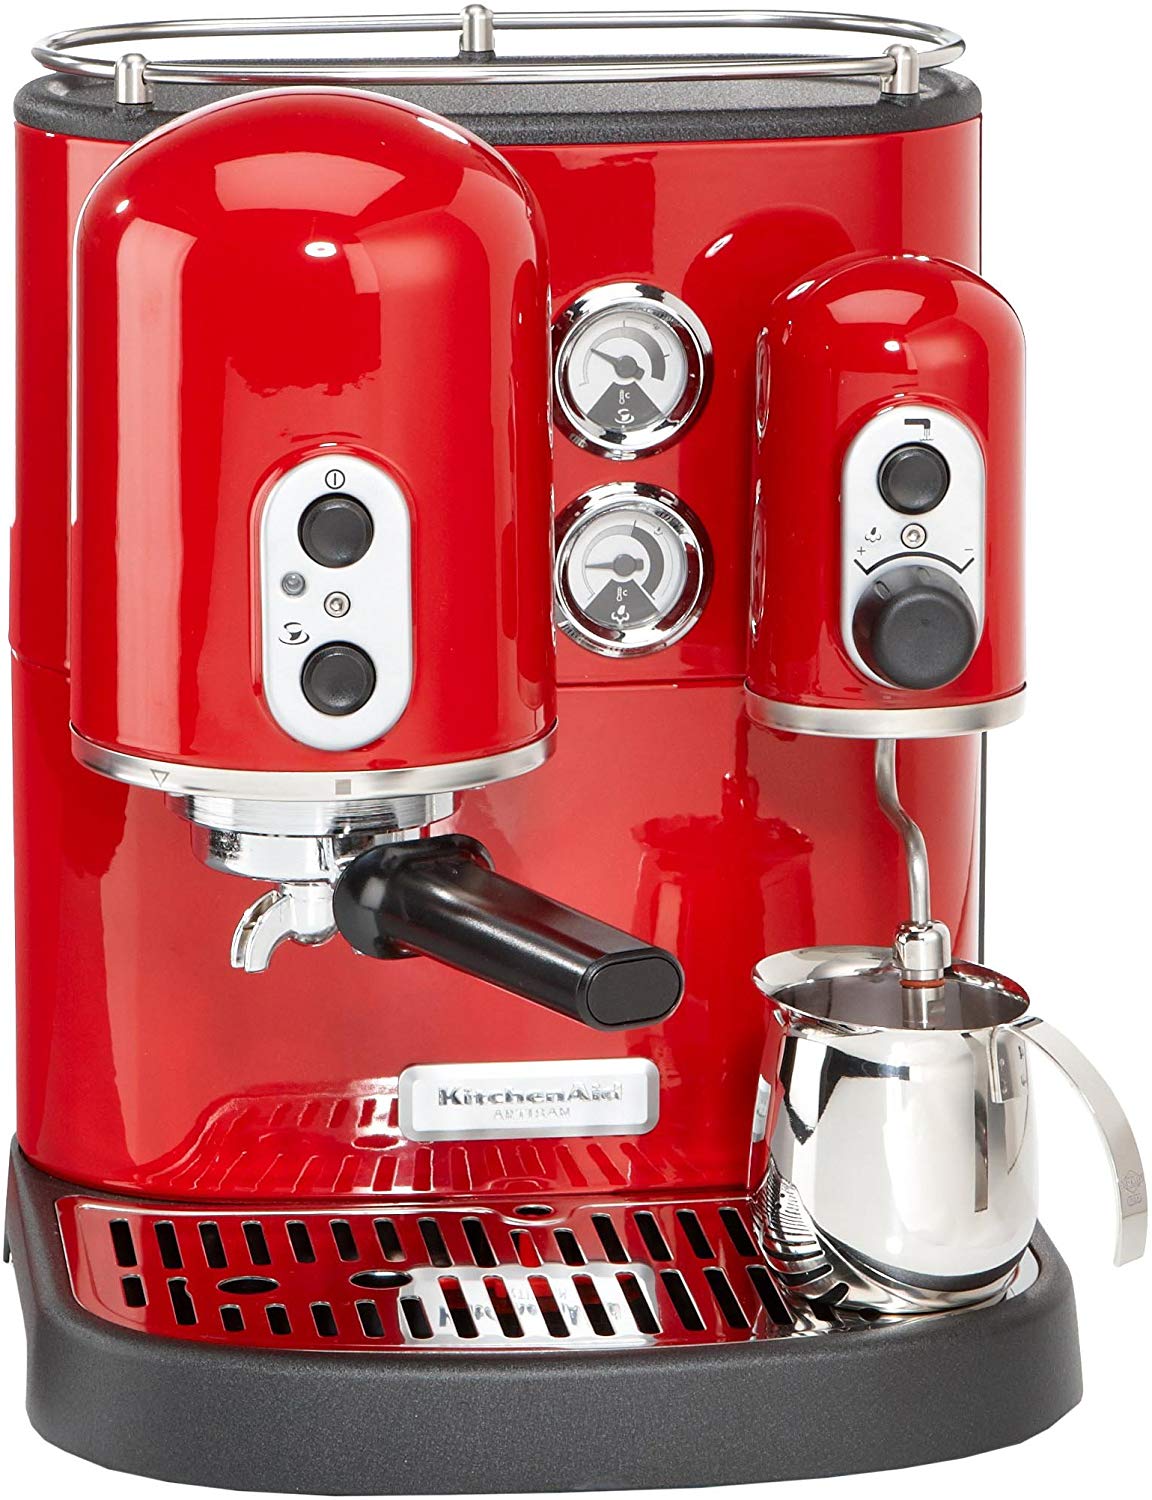 KitchenAid Artisan 5KES100, Espresso & Cappuccino Machines Reviews and